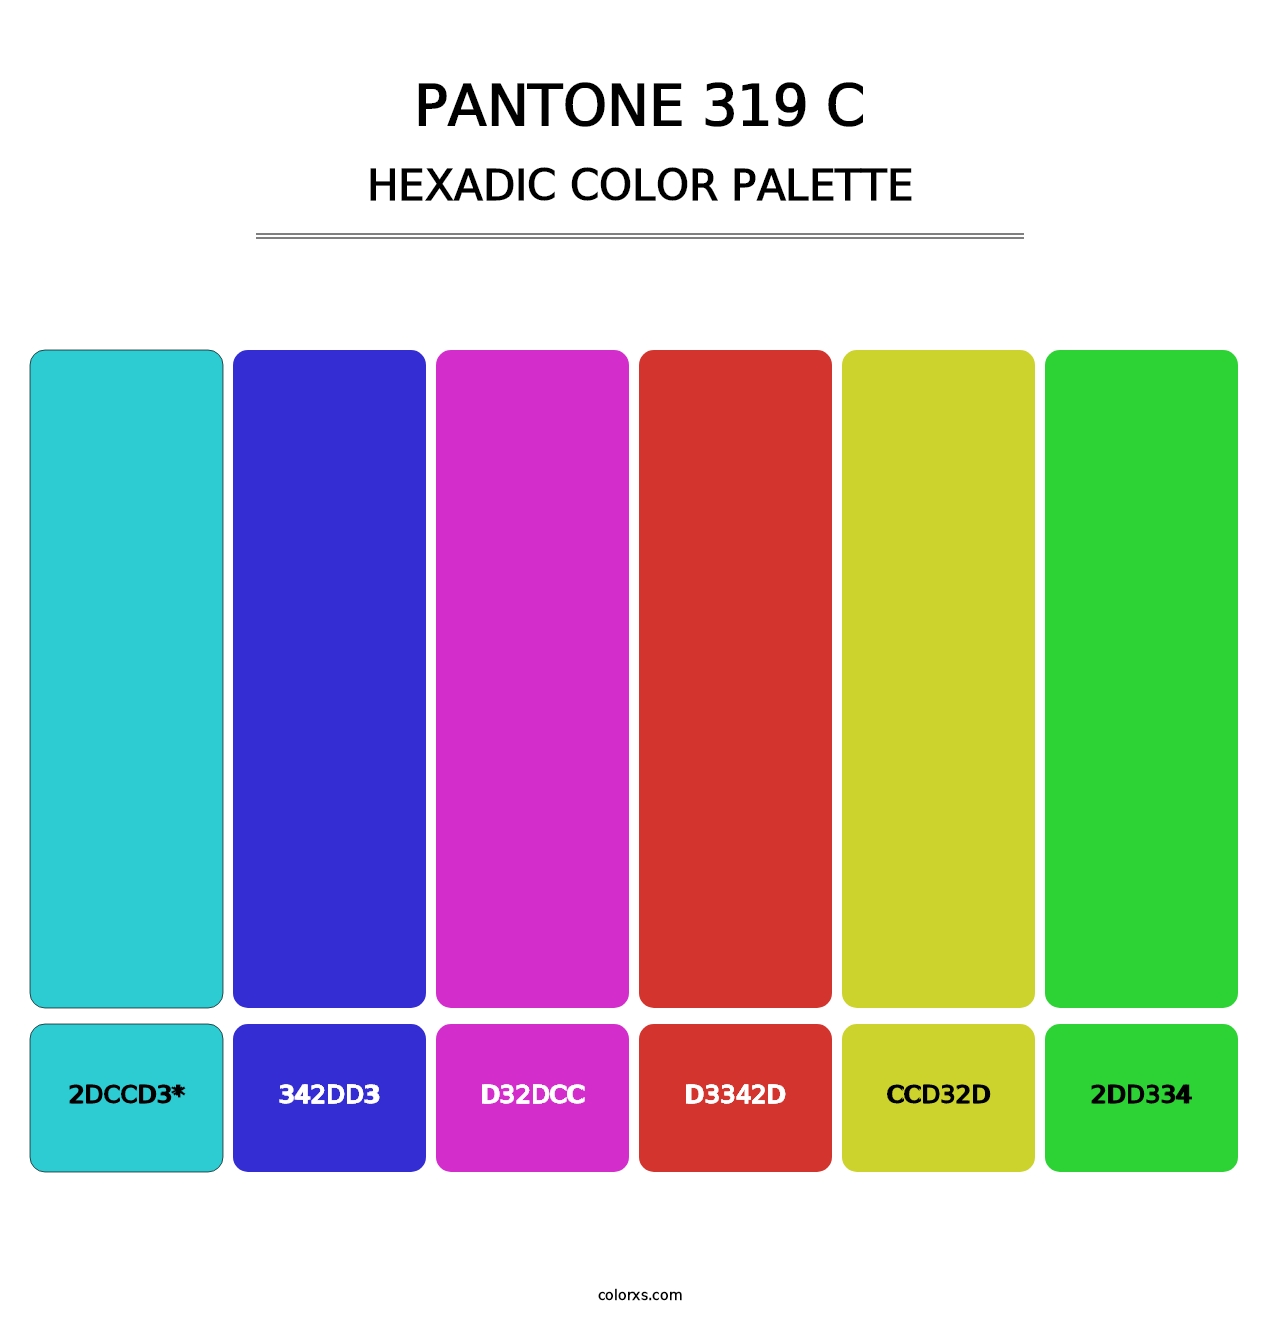 PANTONE 319 C - Hexadic Color Palette